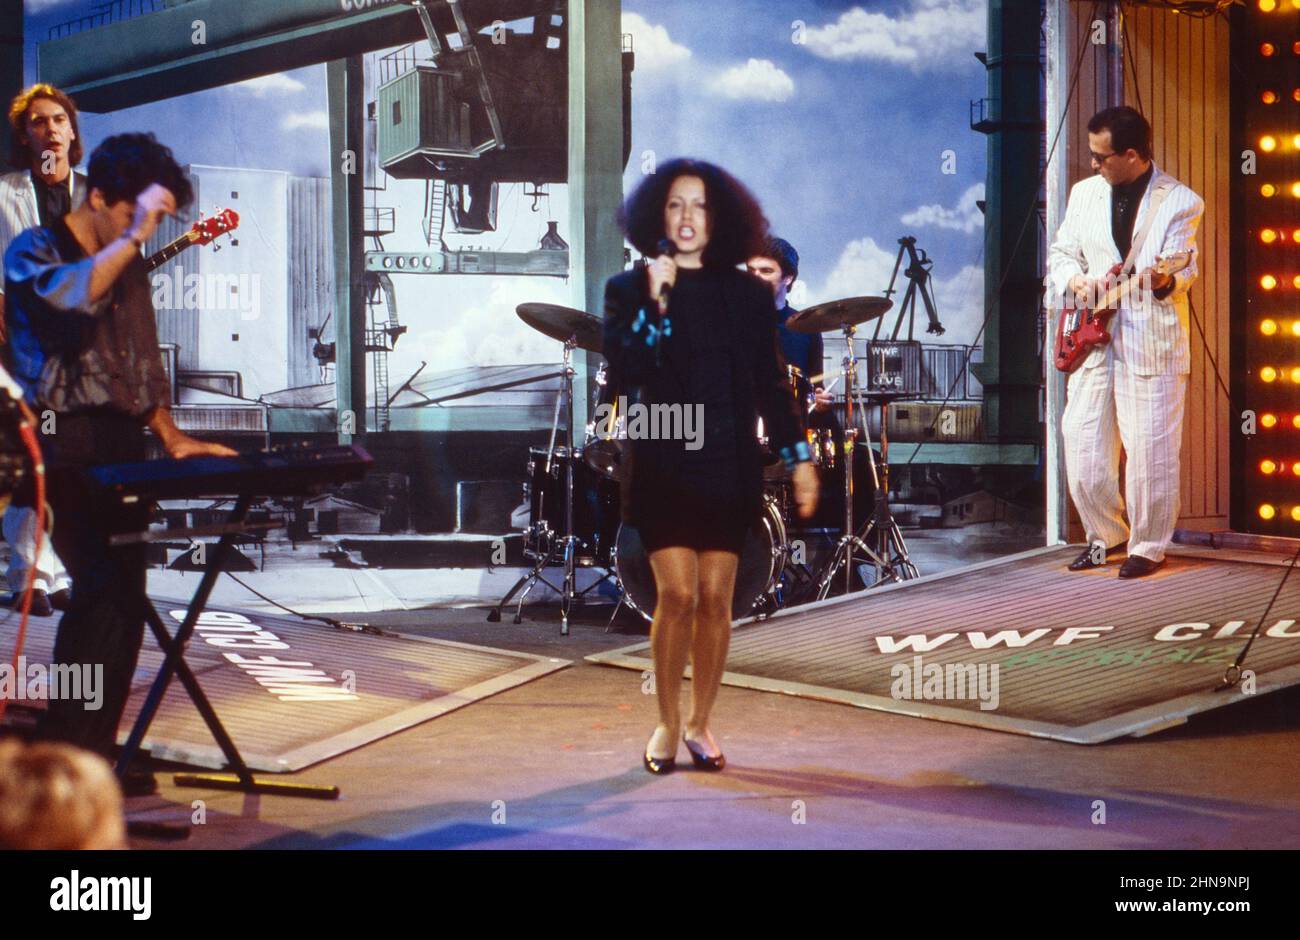 Matia Bazar, italienische Pop-Gruppe mit Sängerin Antonella Ruggiero, 1987. Matia Bazar, gruppo pop italiano con cantante Antonella Ruggiero, 1987. Foto Stock